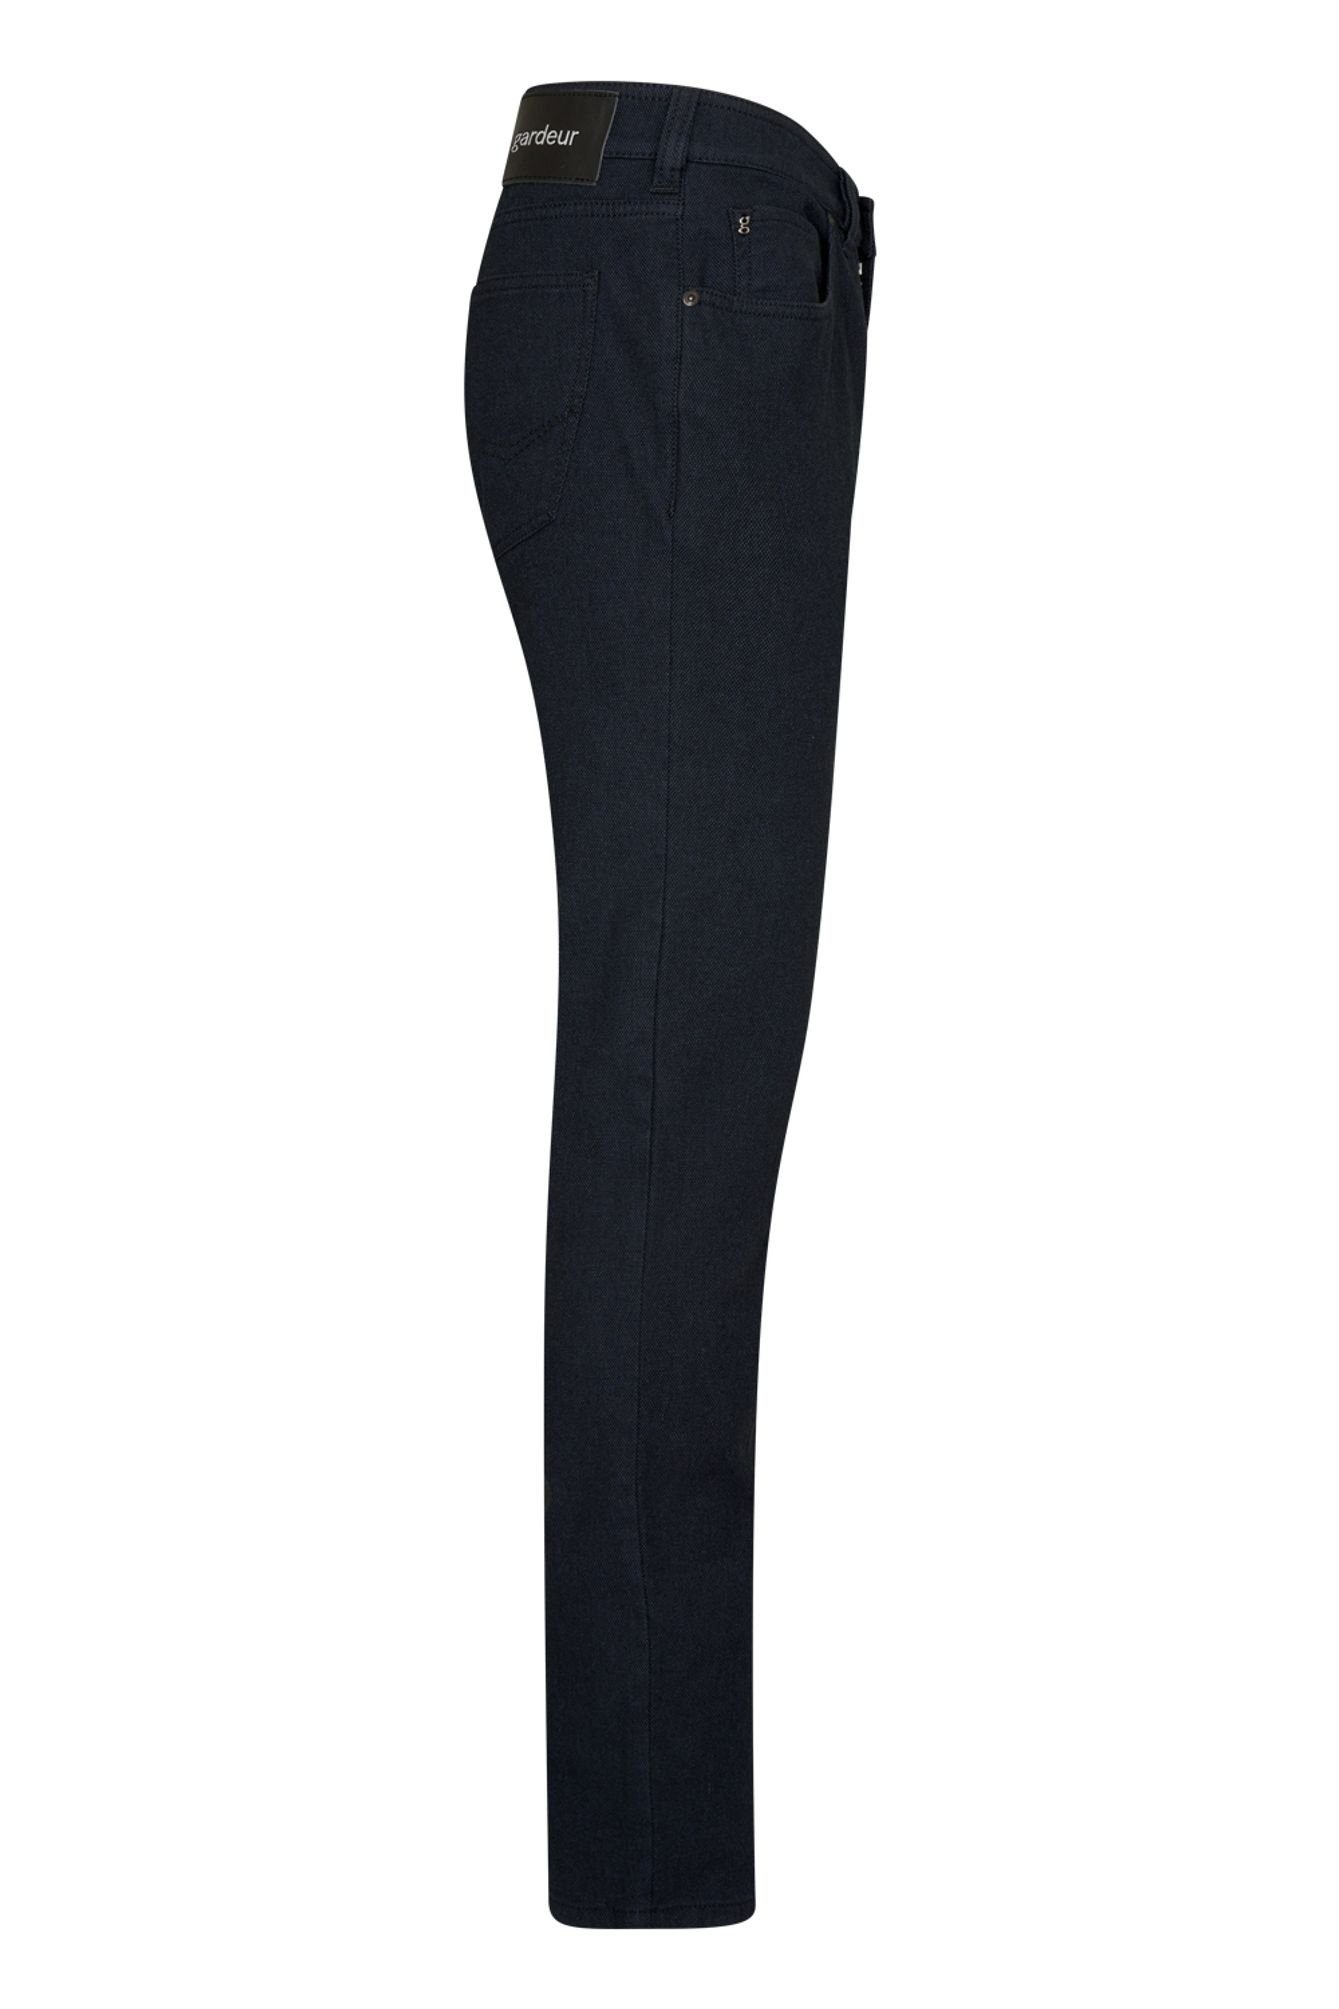 5-Pocket-Jeans dark Bill-3 GARDEUR (411851) Atelier (1069) navy